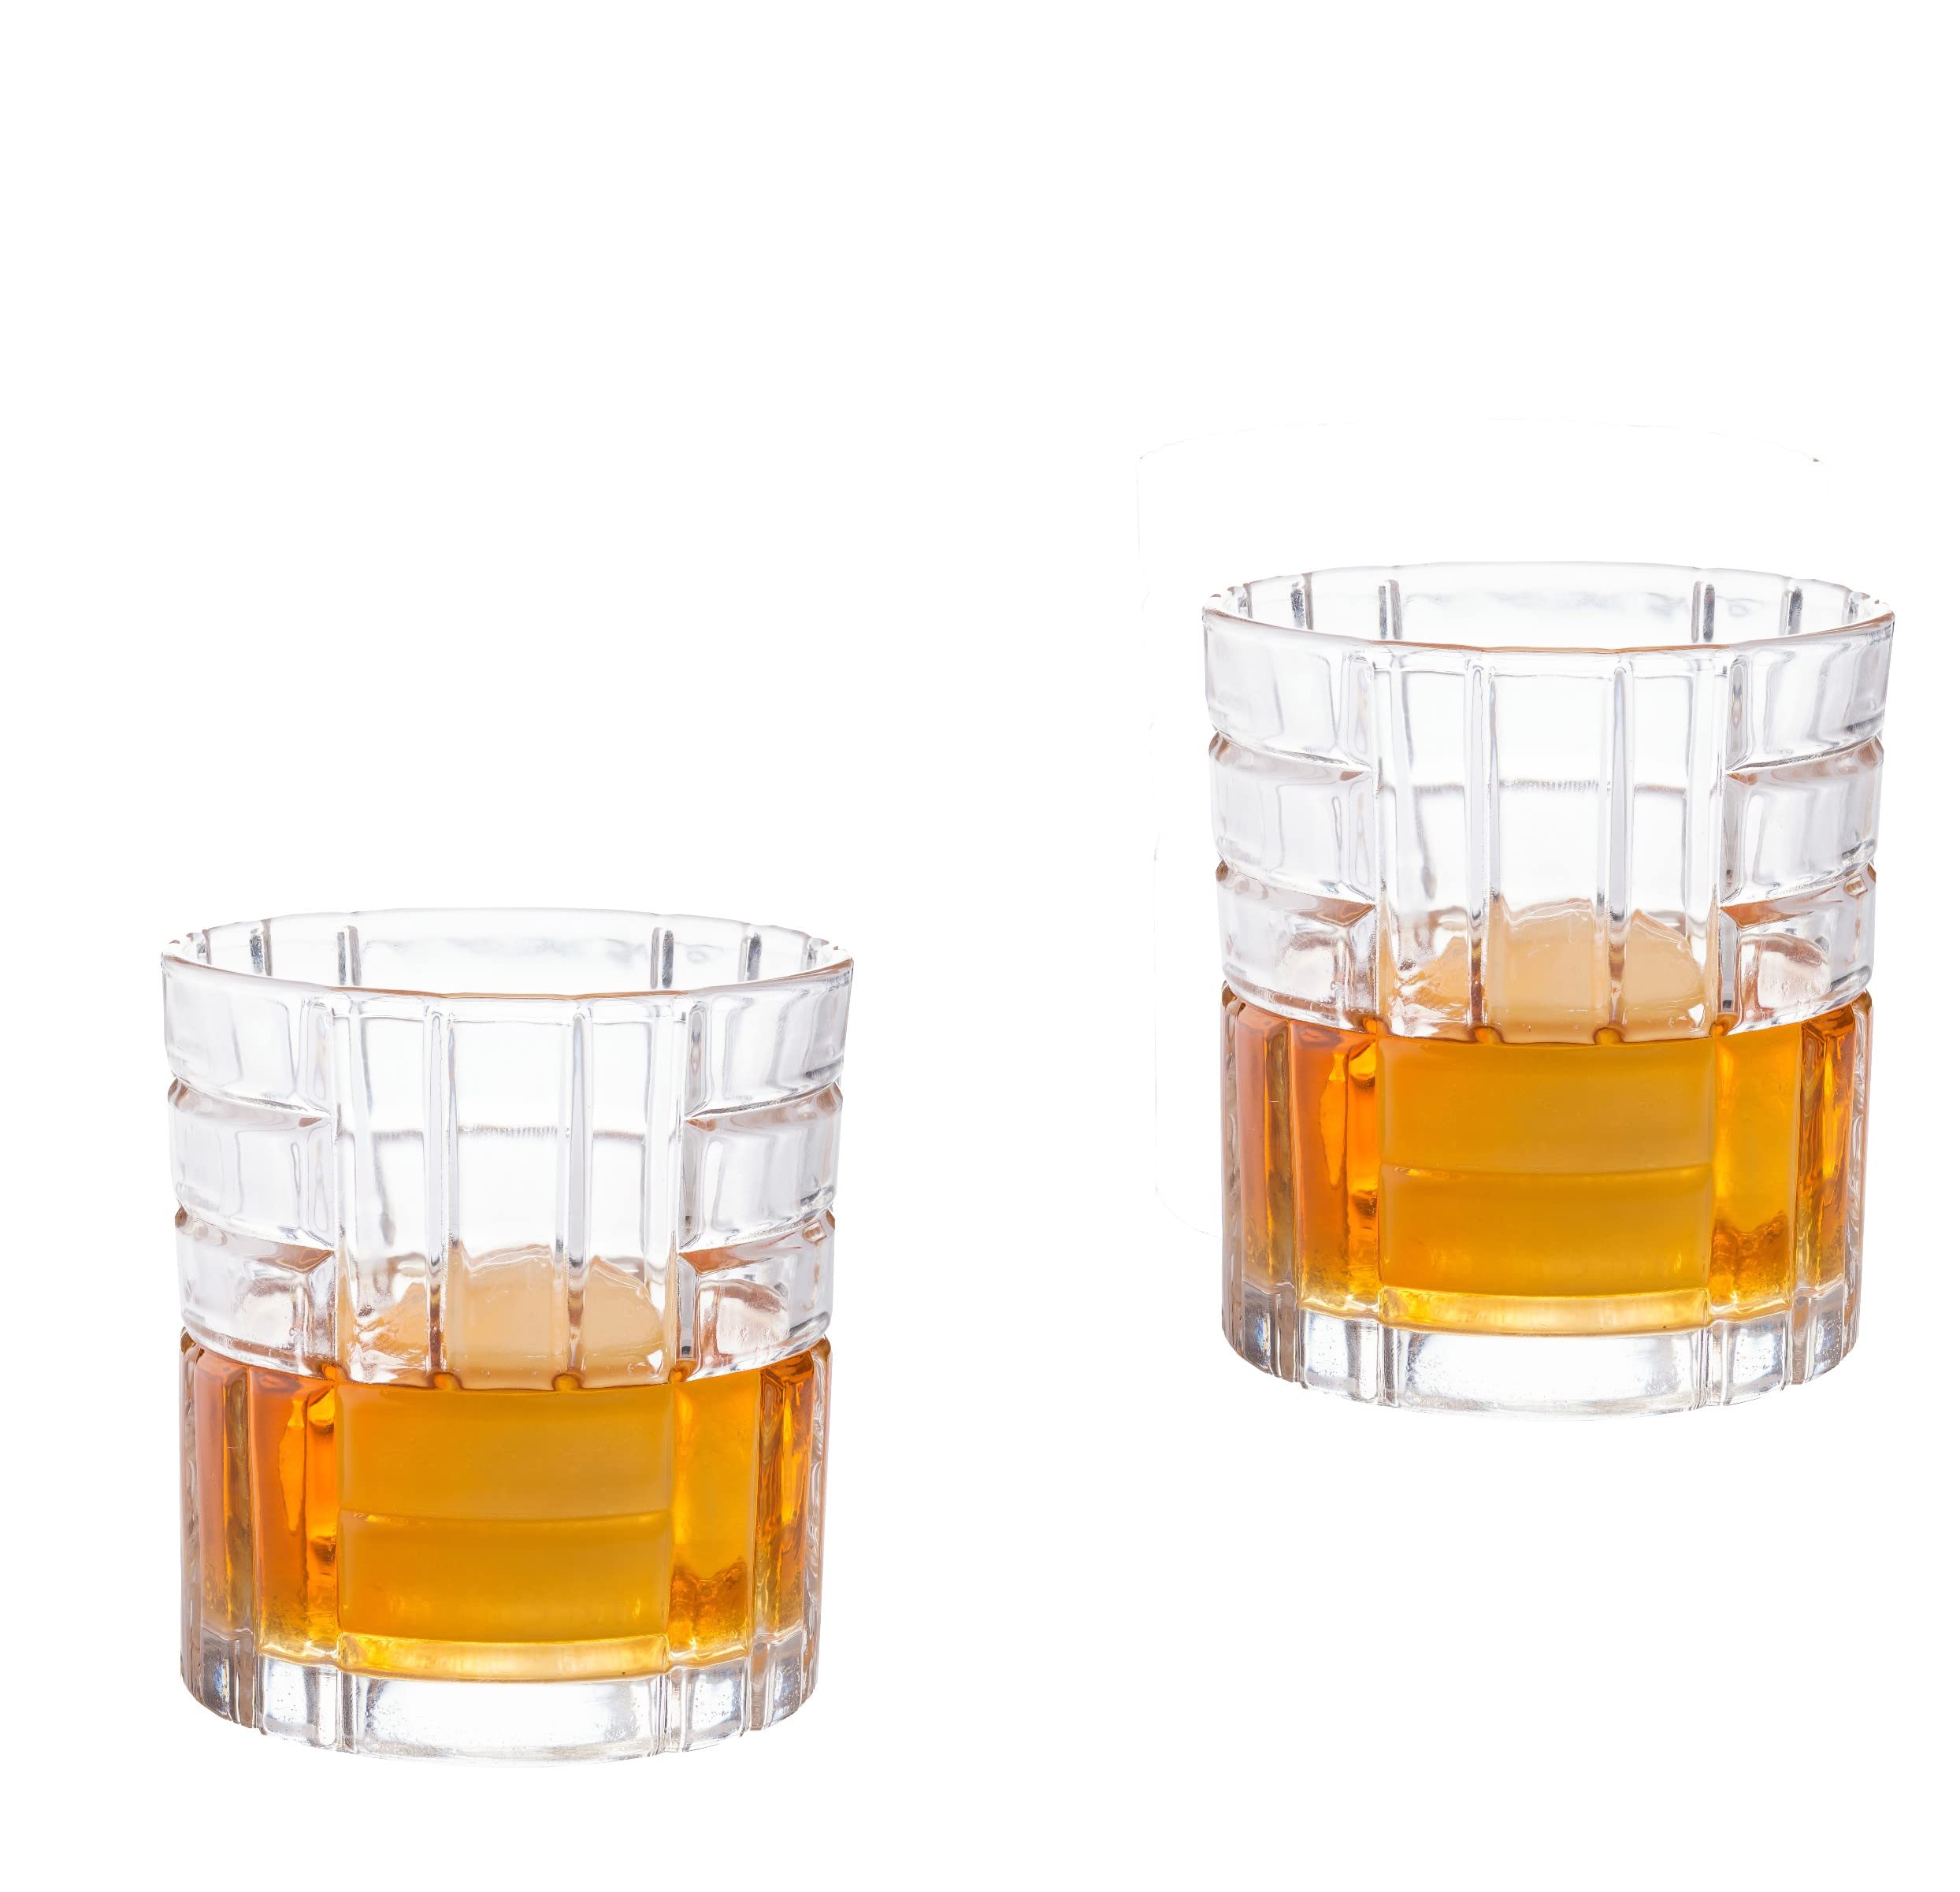 Bezrat Whiskey Glasses Set of 6 - Multi Style shot glasses - 10 oz scotch glasses - Rocks glasses Barware For Scotch, Bourbon, Liquor and Cocktail Drinks, Bourbon gifts for Men